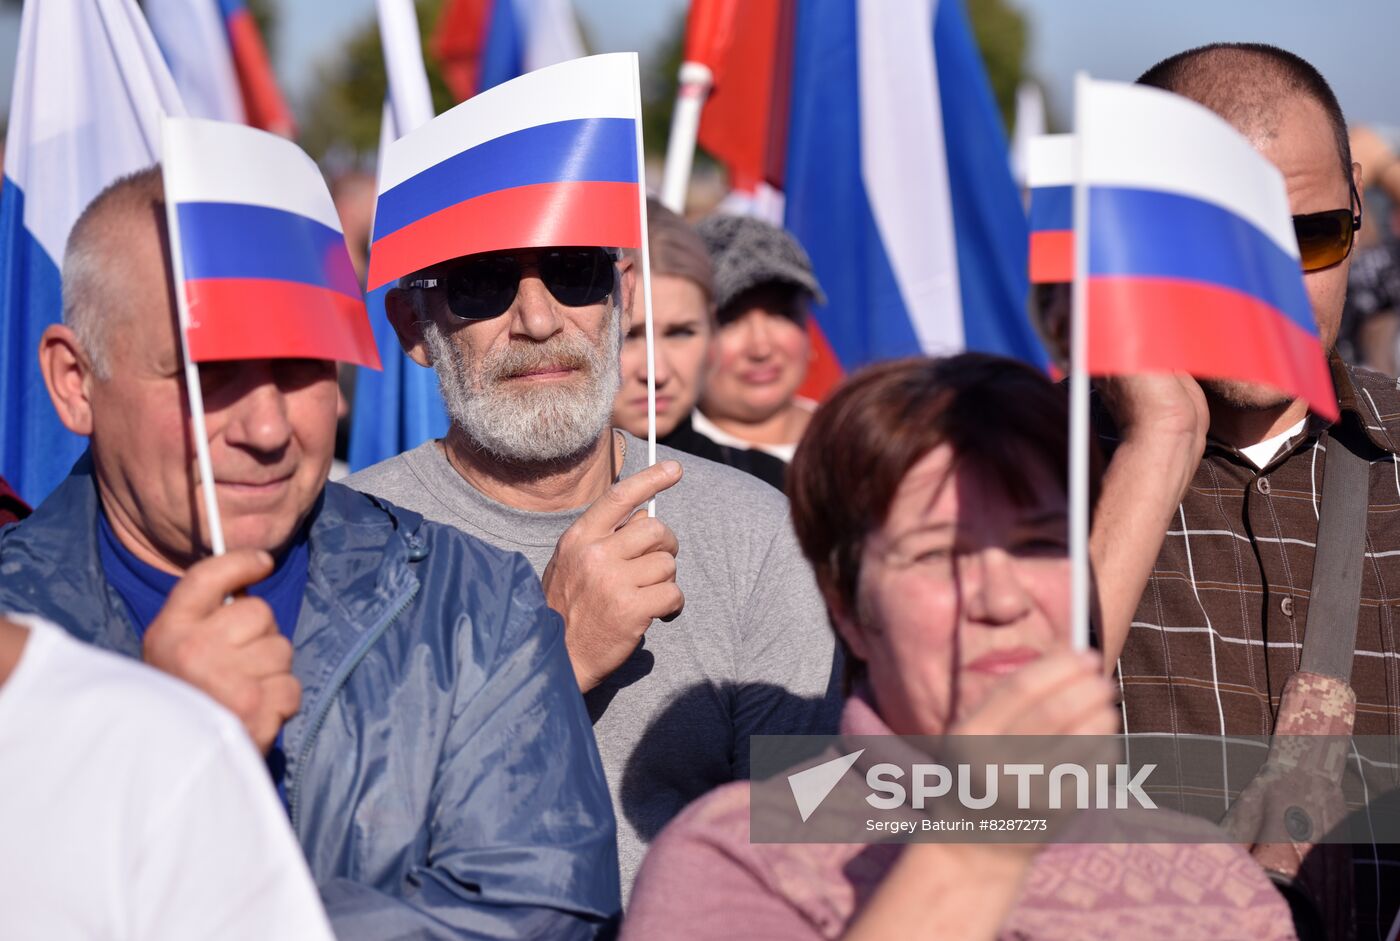 DPR Russia Accession Rally